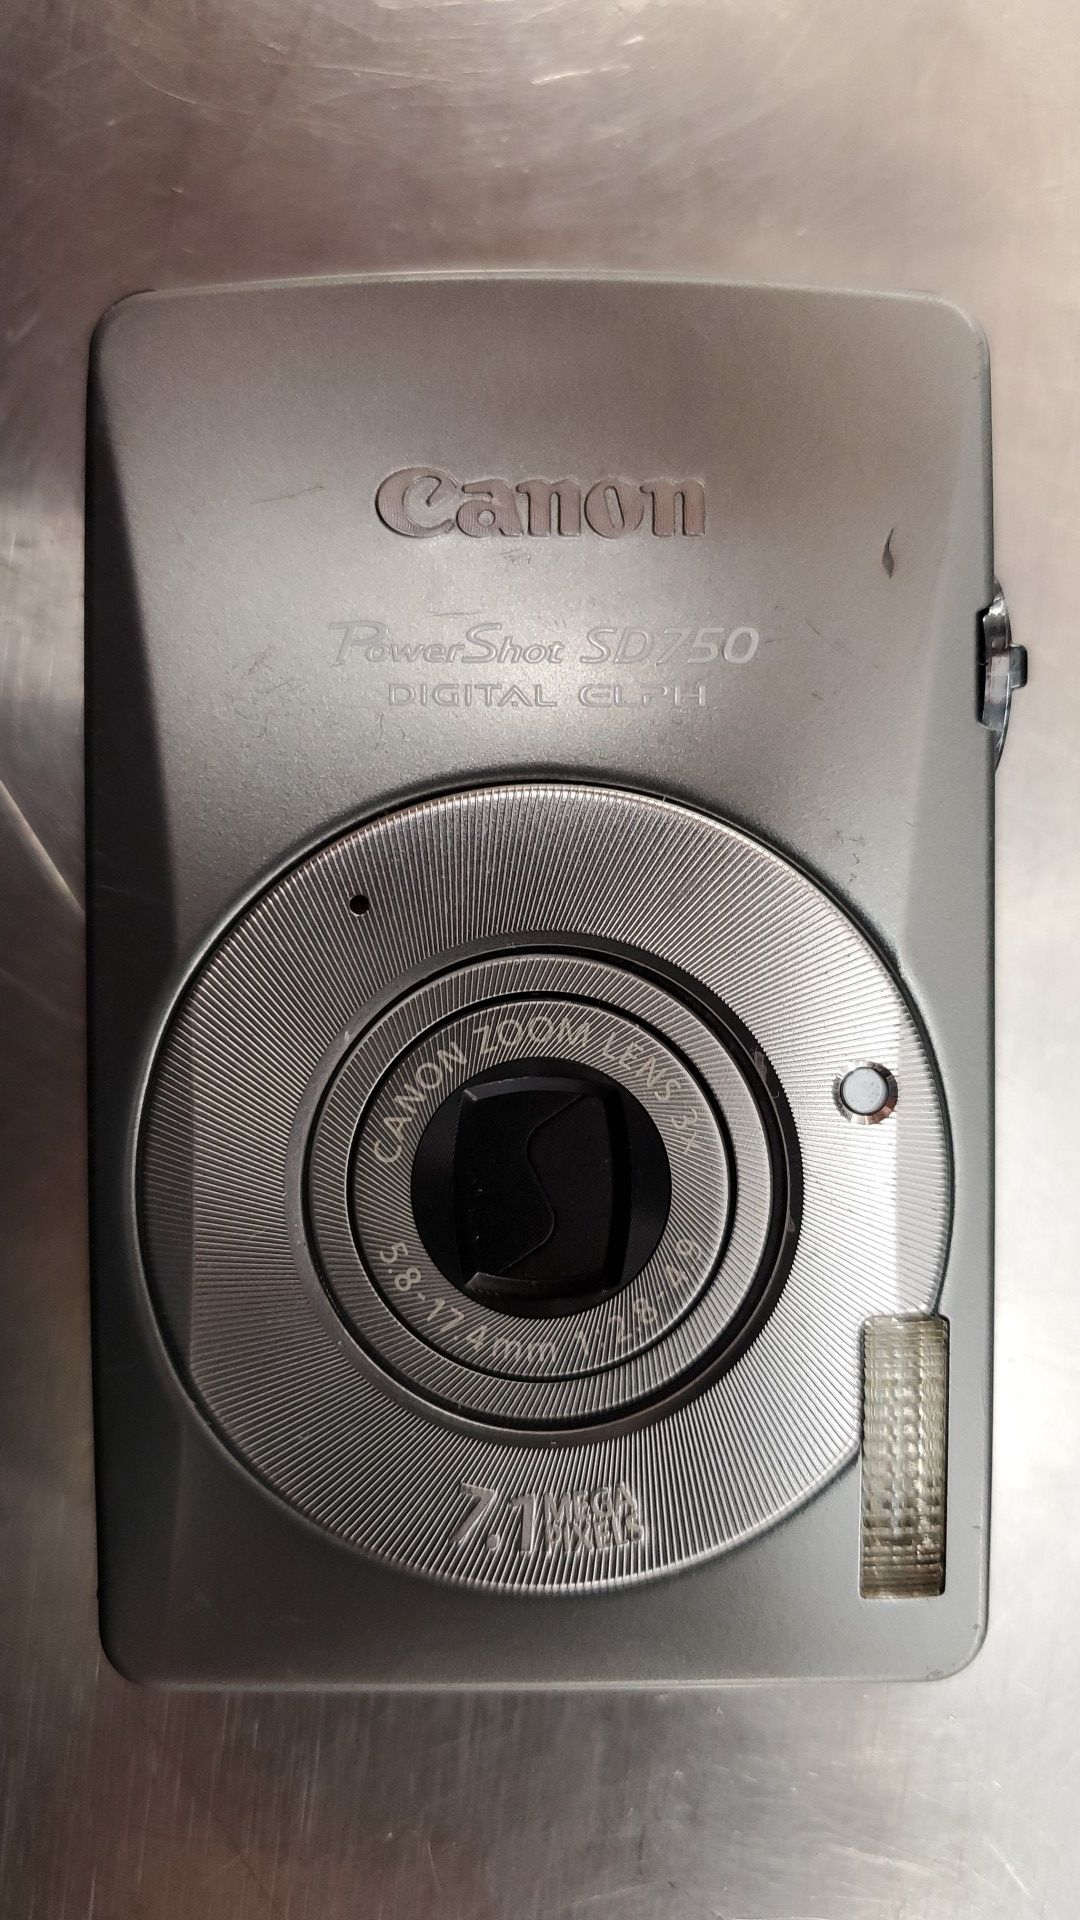 Canon powershot sd750